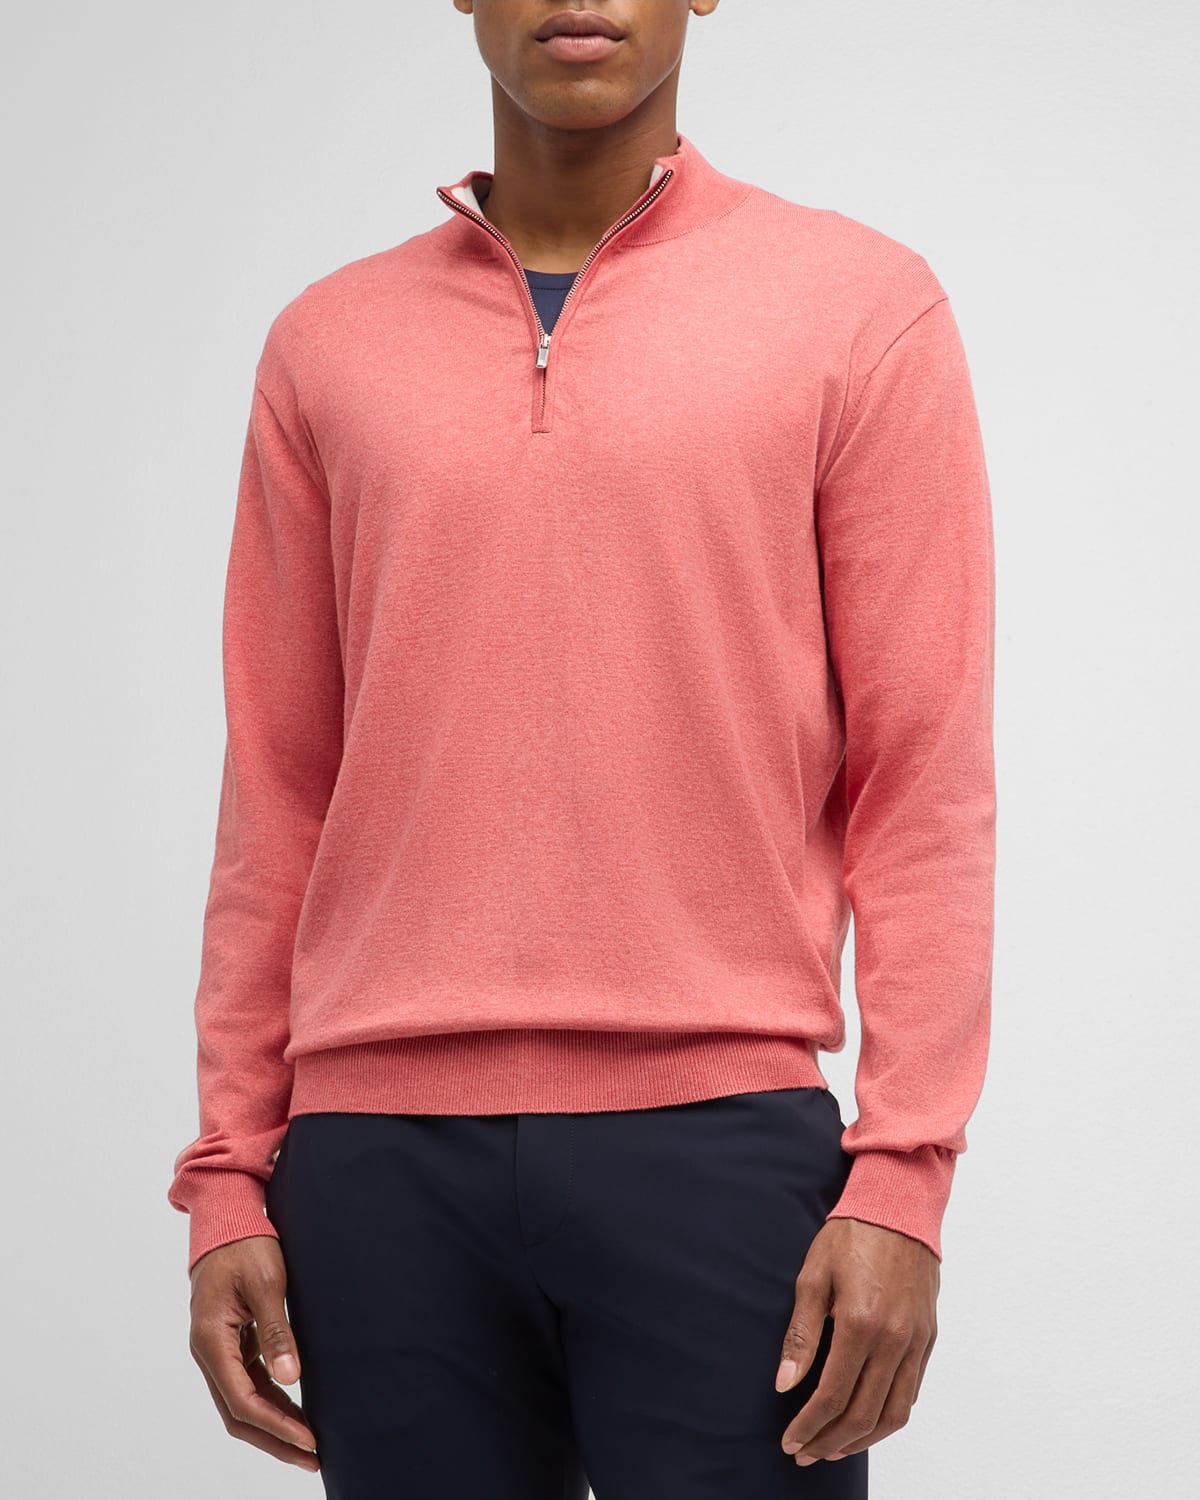 Men's Whitaker Quarter-Zip Sweater